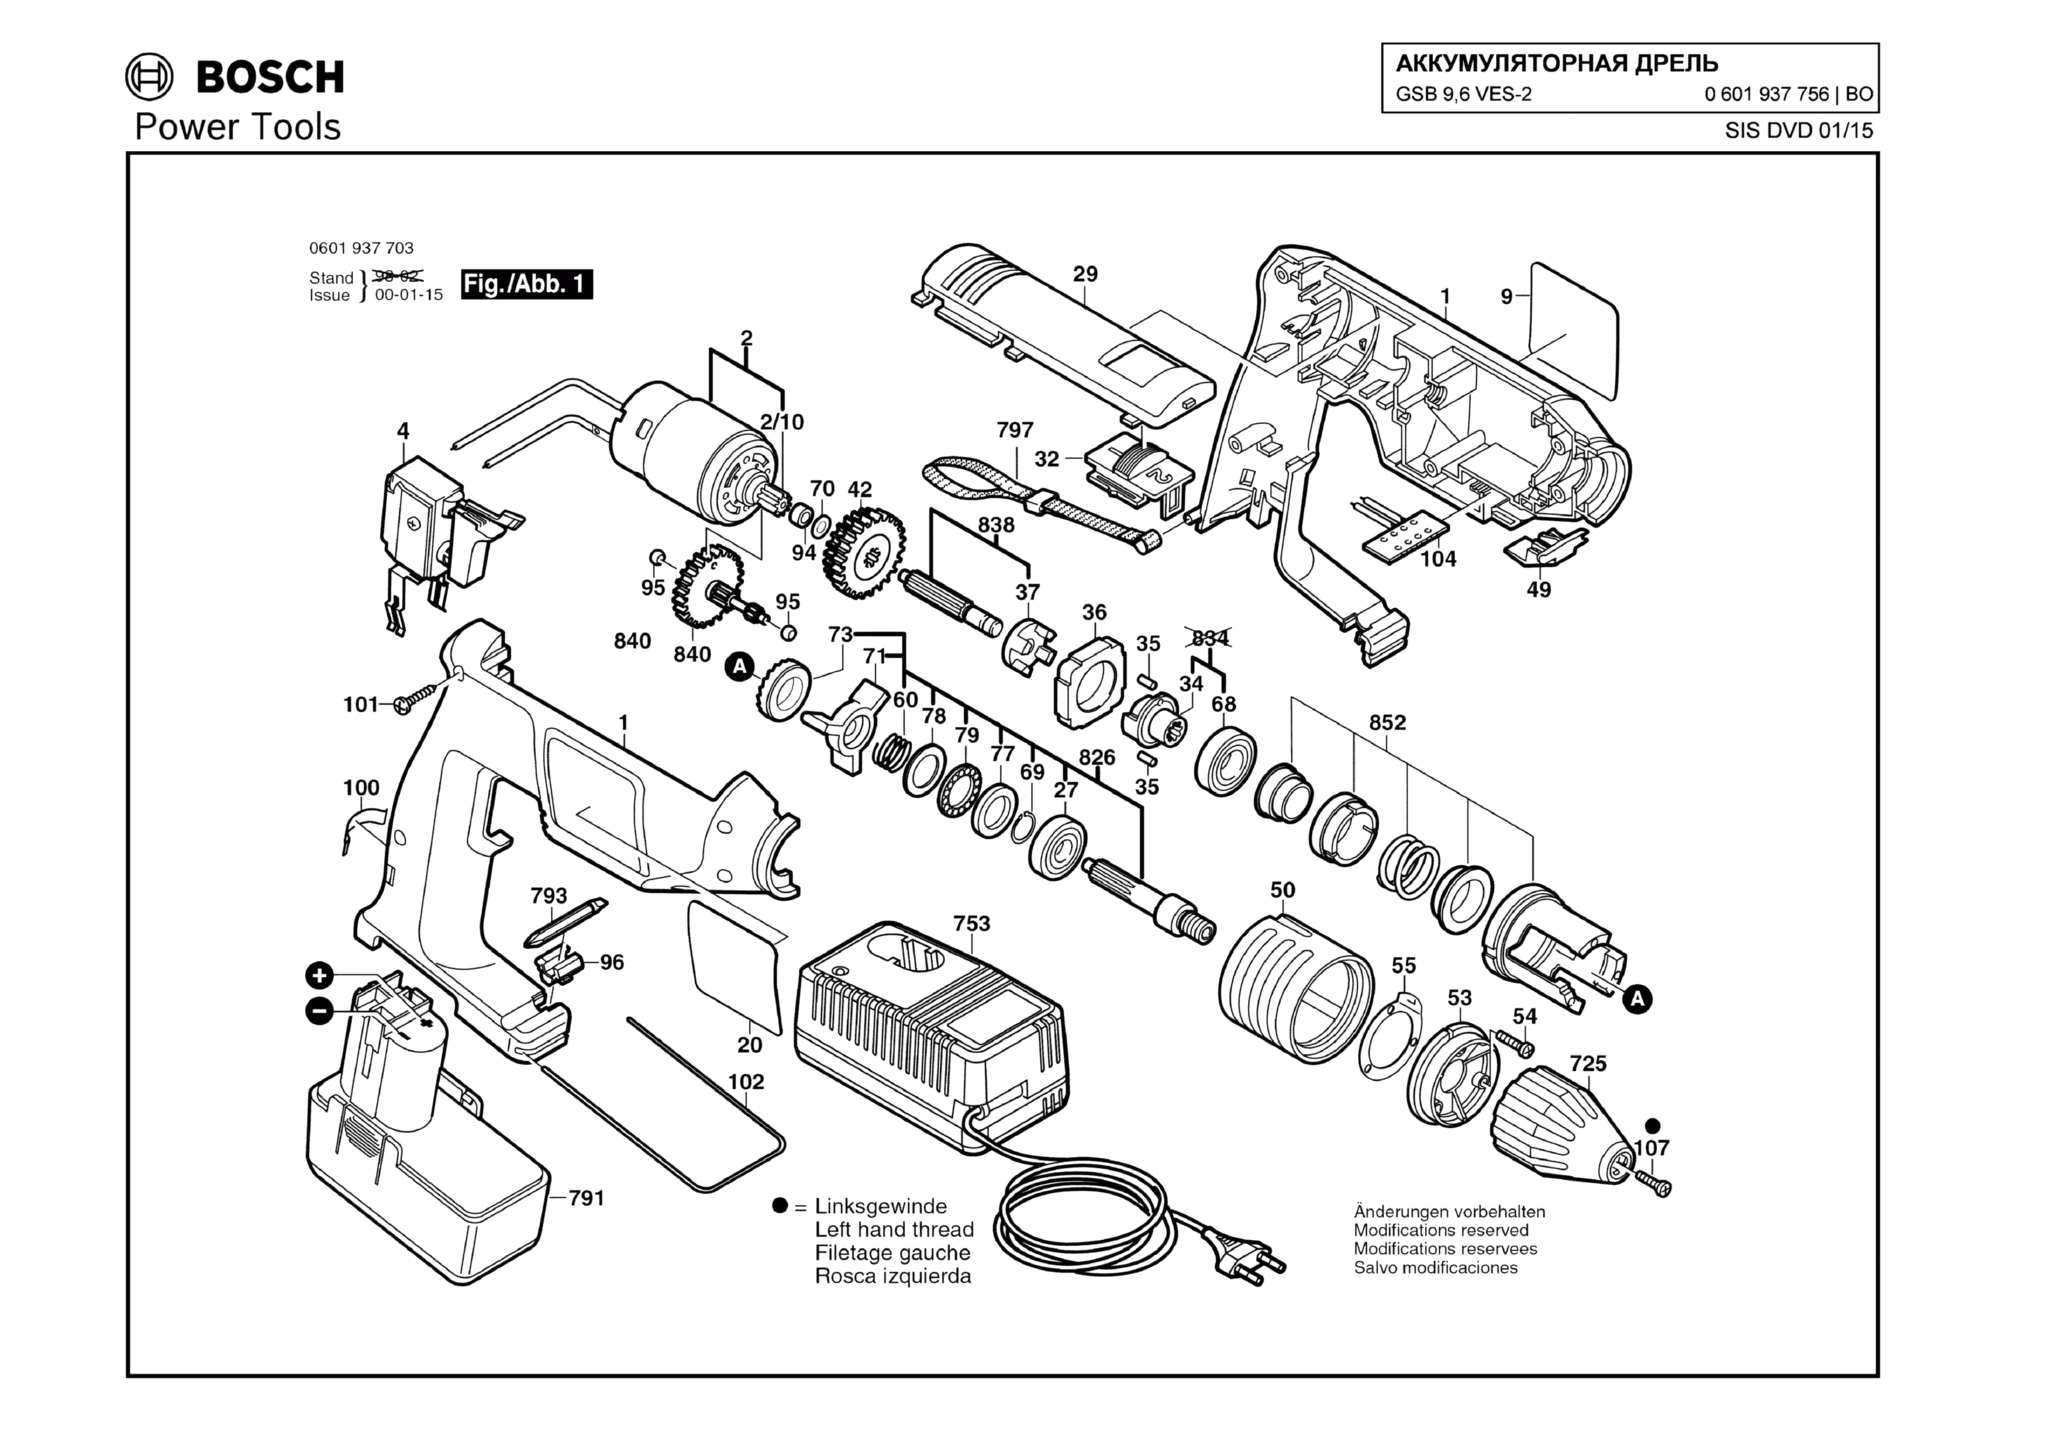 Запчасти, схема и деталировка Bosch GSB 9,6 VES-2 (ТИП 0601937756)